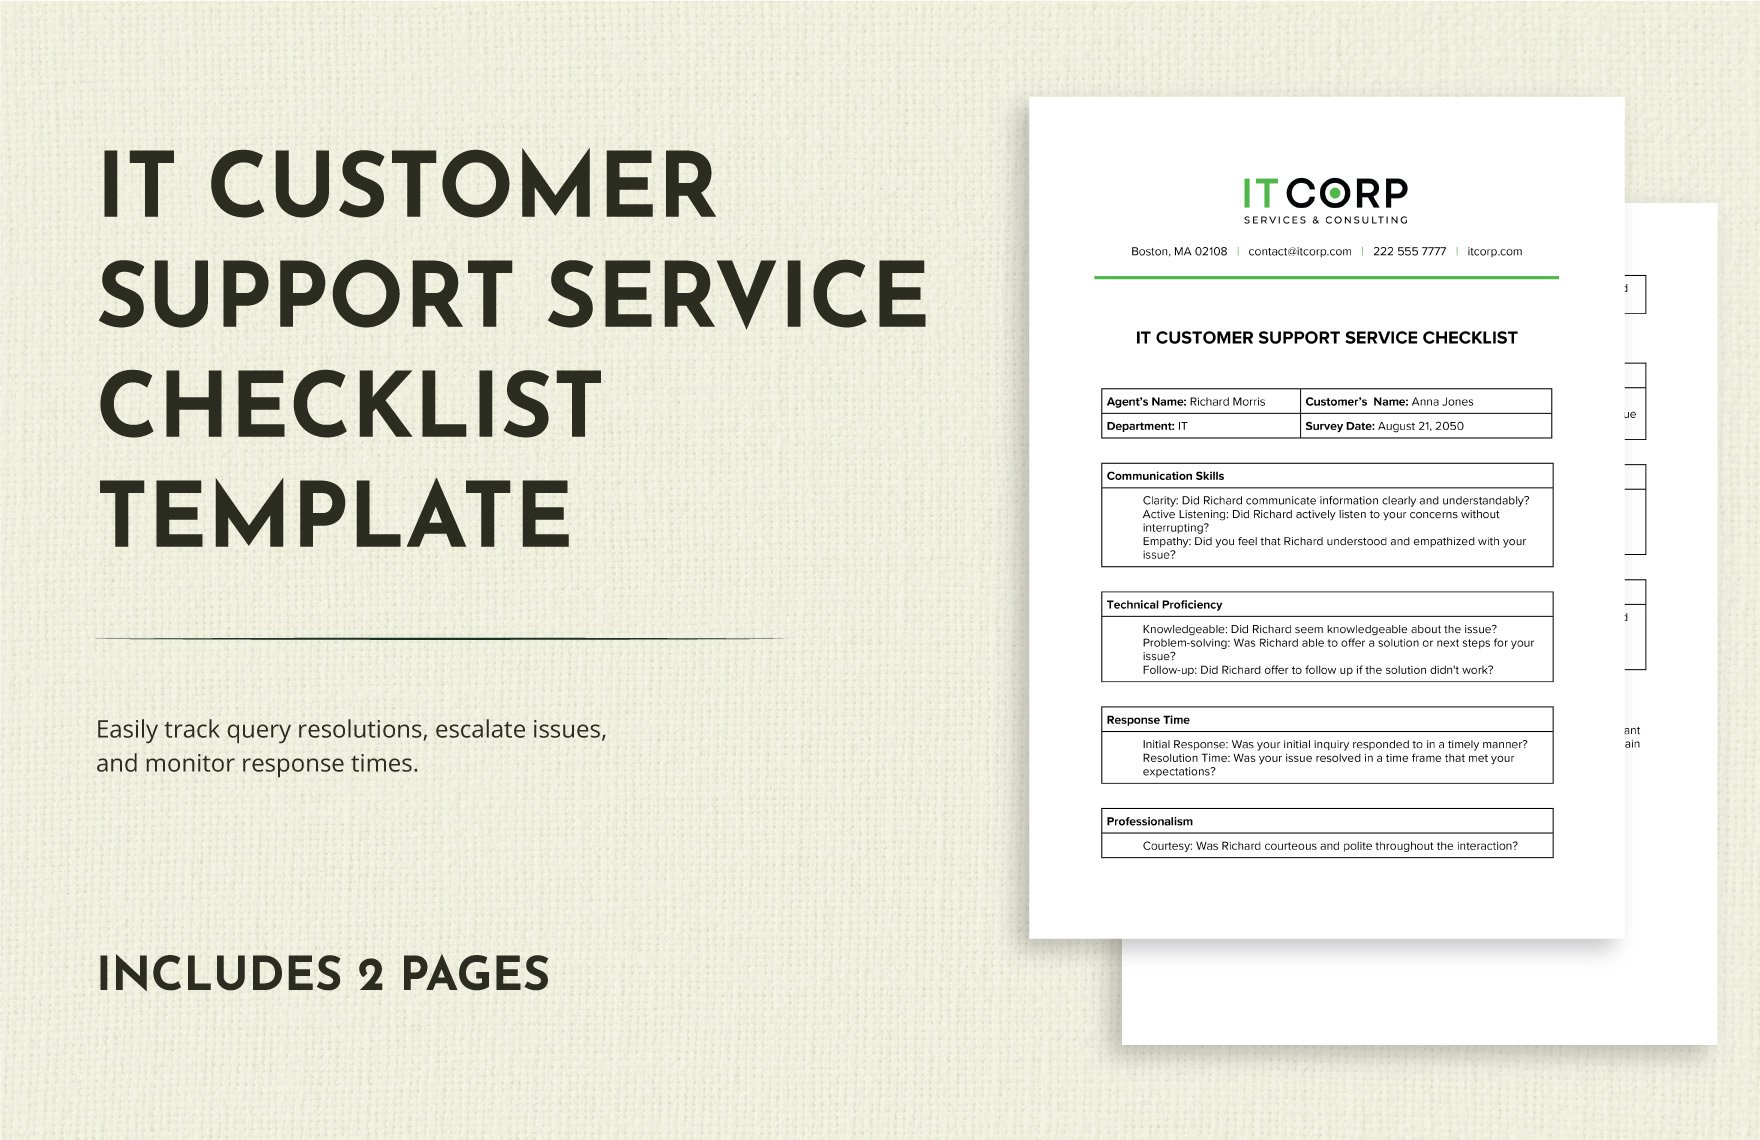 IT Customer Support Service Checklist Template